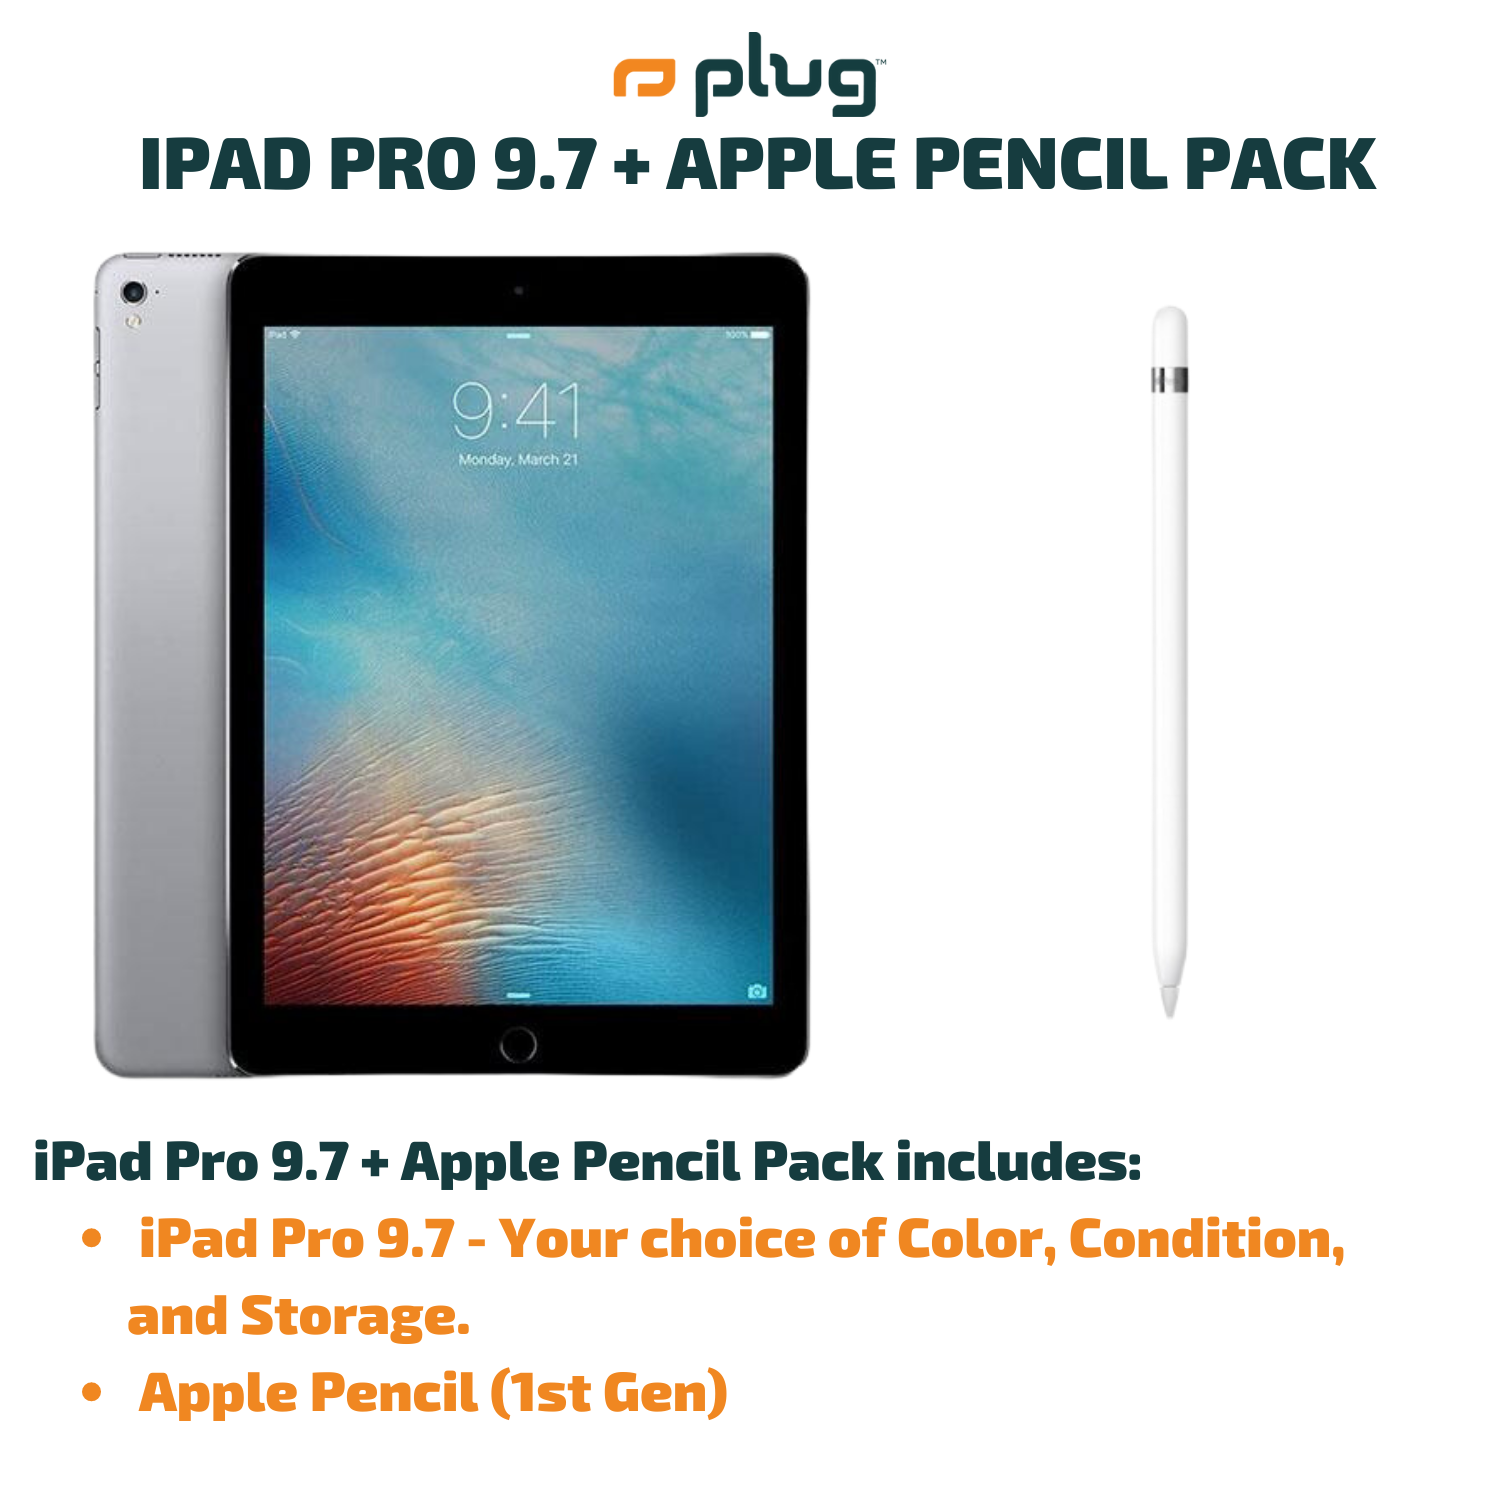 iPad Pro 9.7 + Apple Pencil Pack